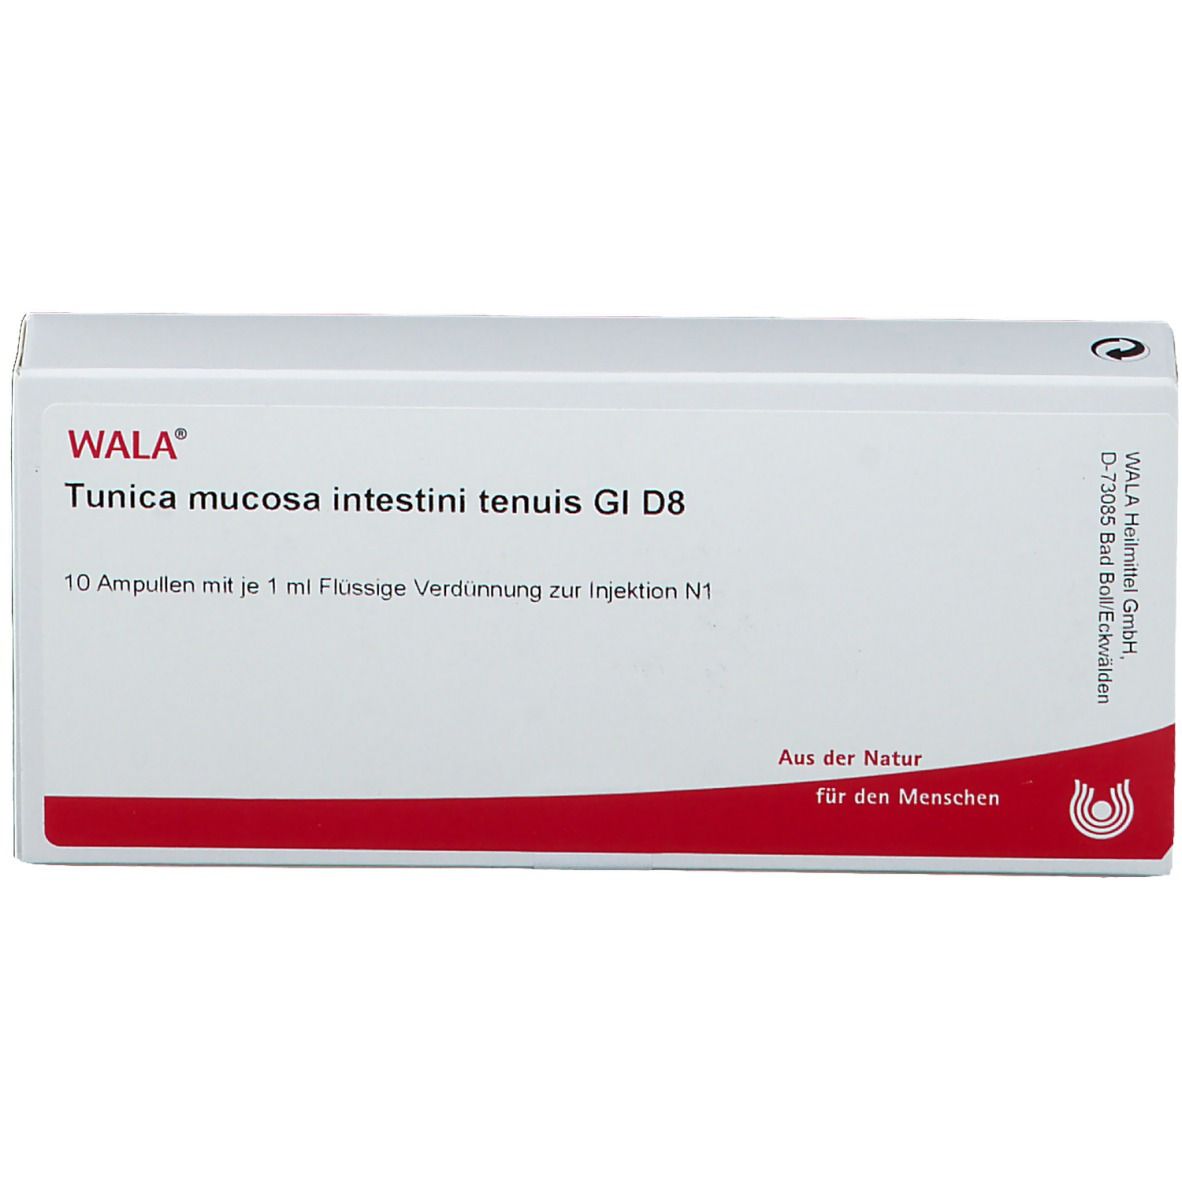 Wala® Tunica mucosa intestini tenuis Gl D 8